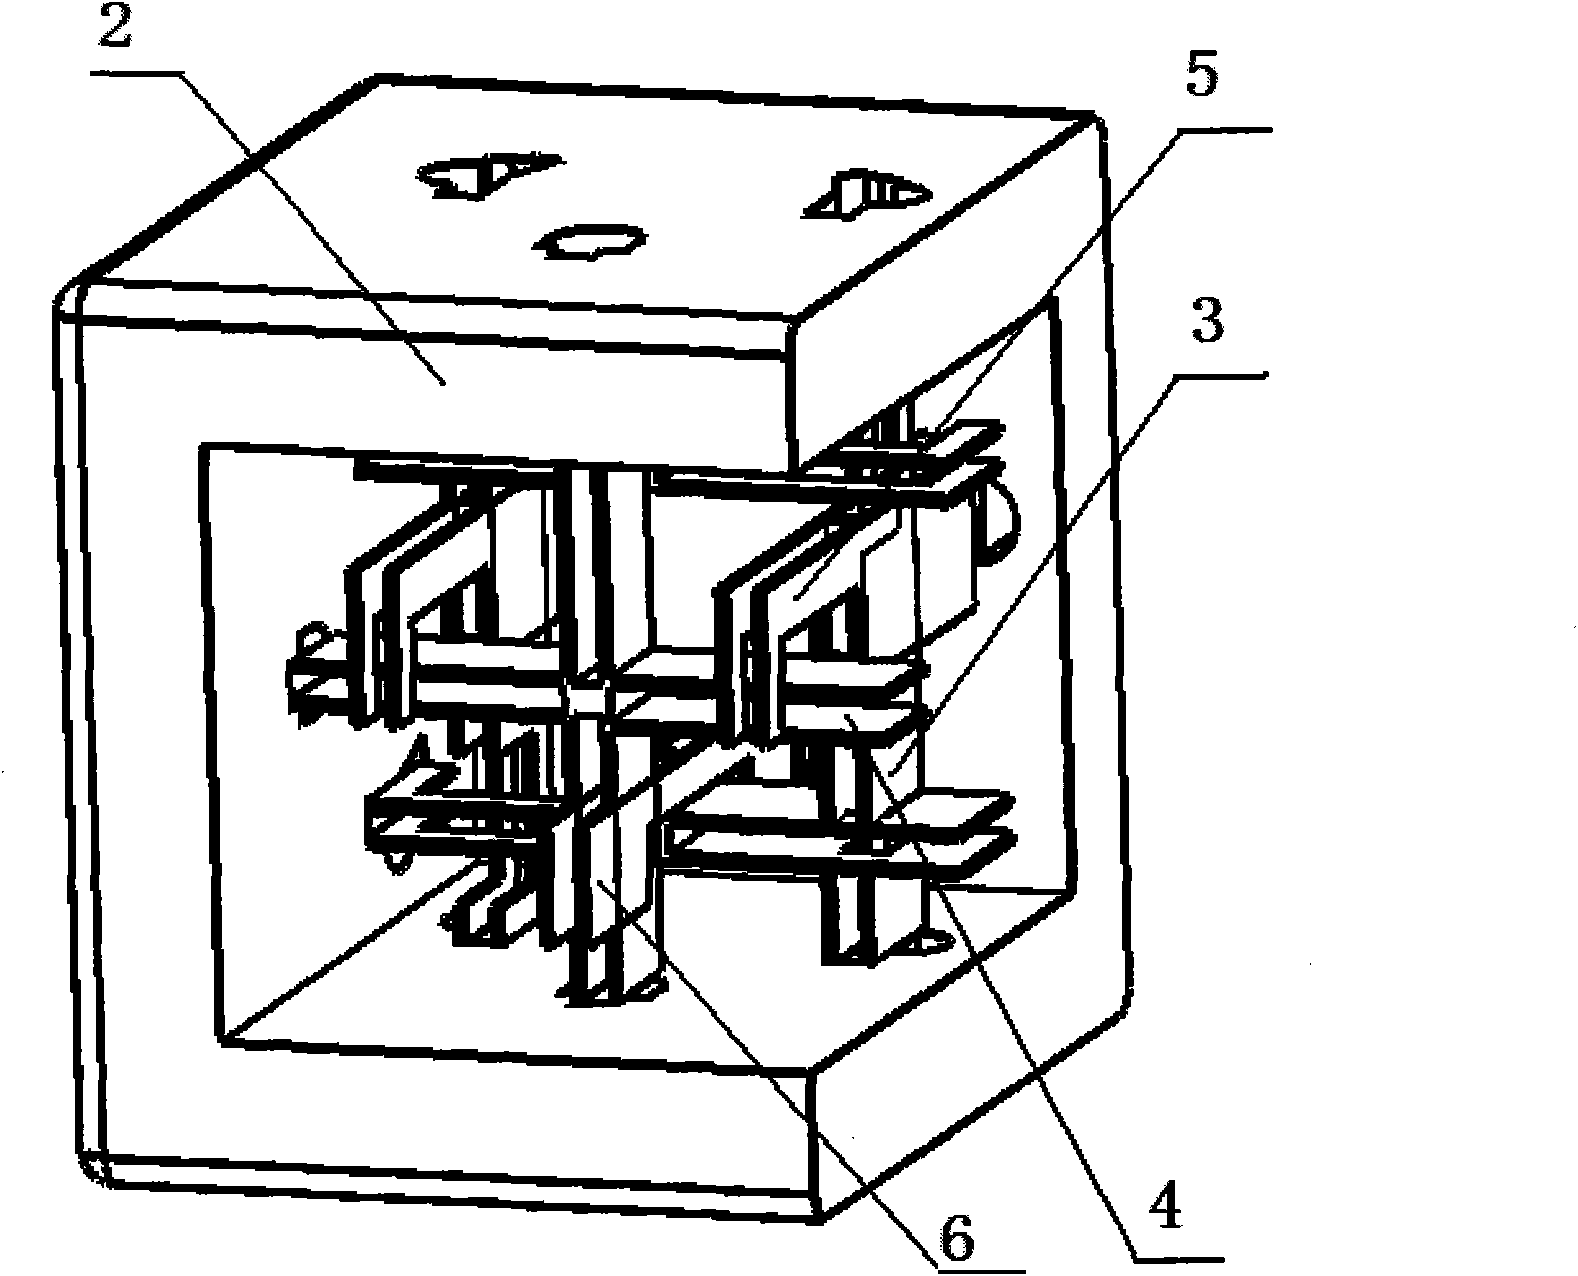 Combination cubic socket